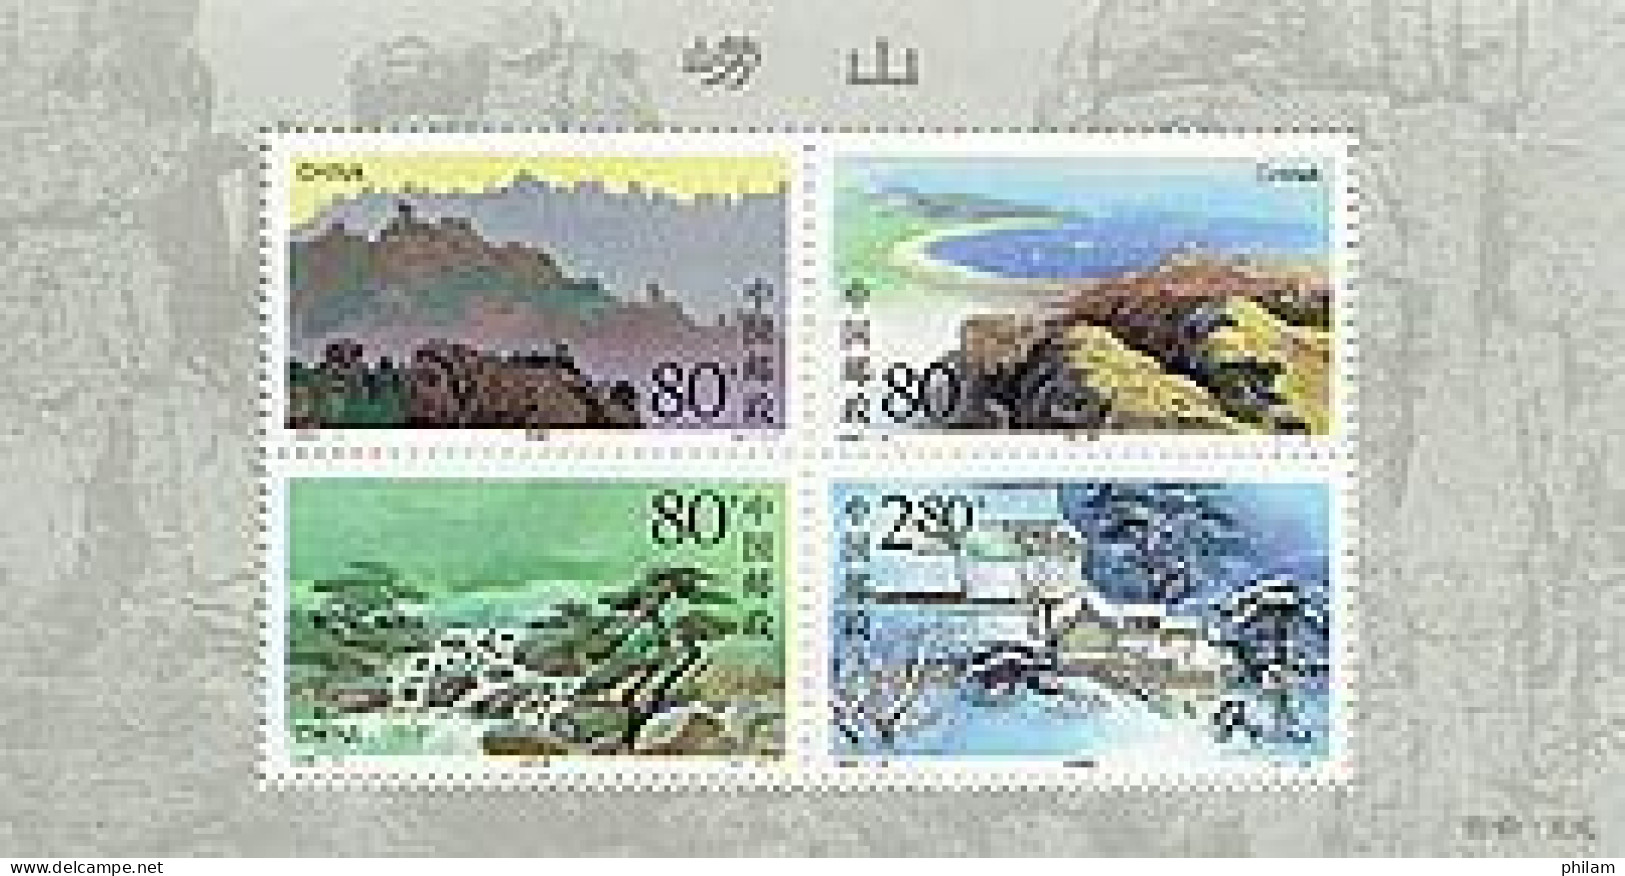 CHINE 2000 - 14 M - Montagnes Laoshan - BF - Unused Stamps